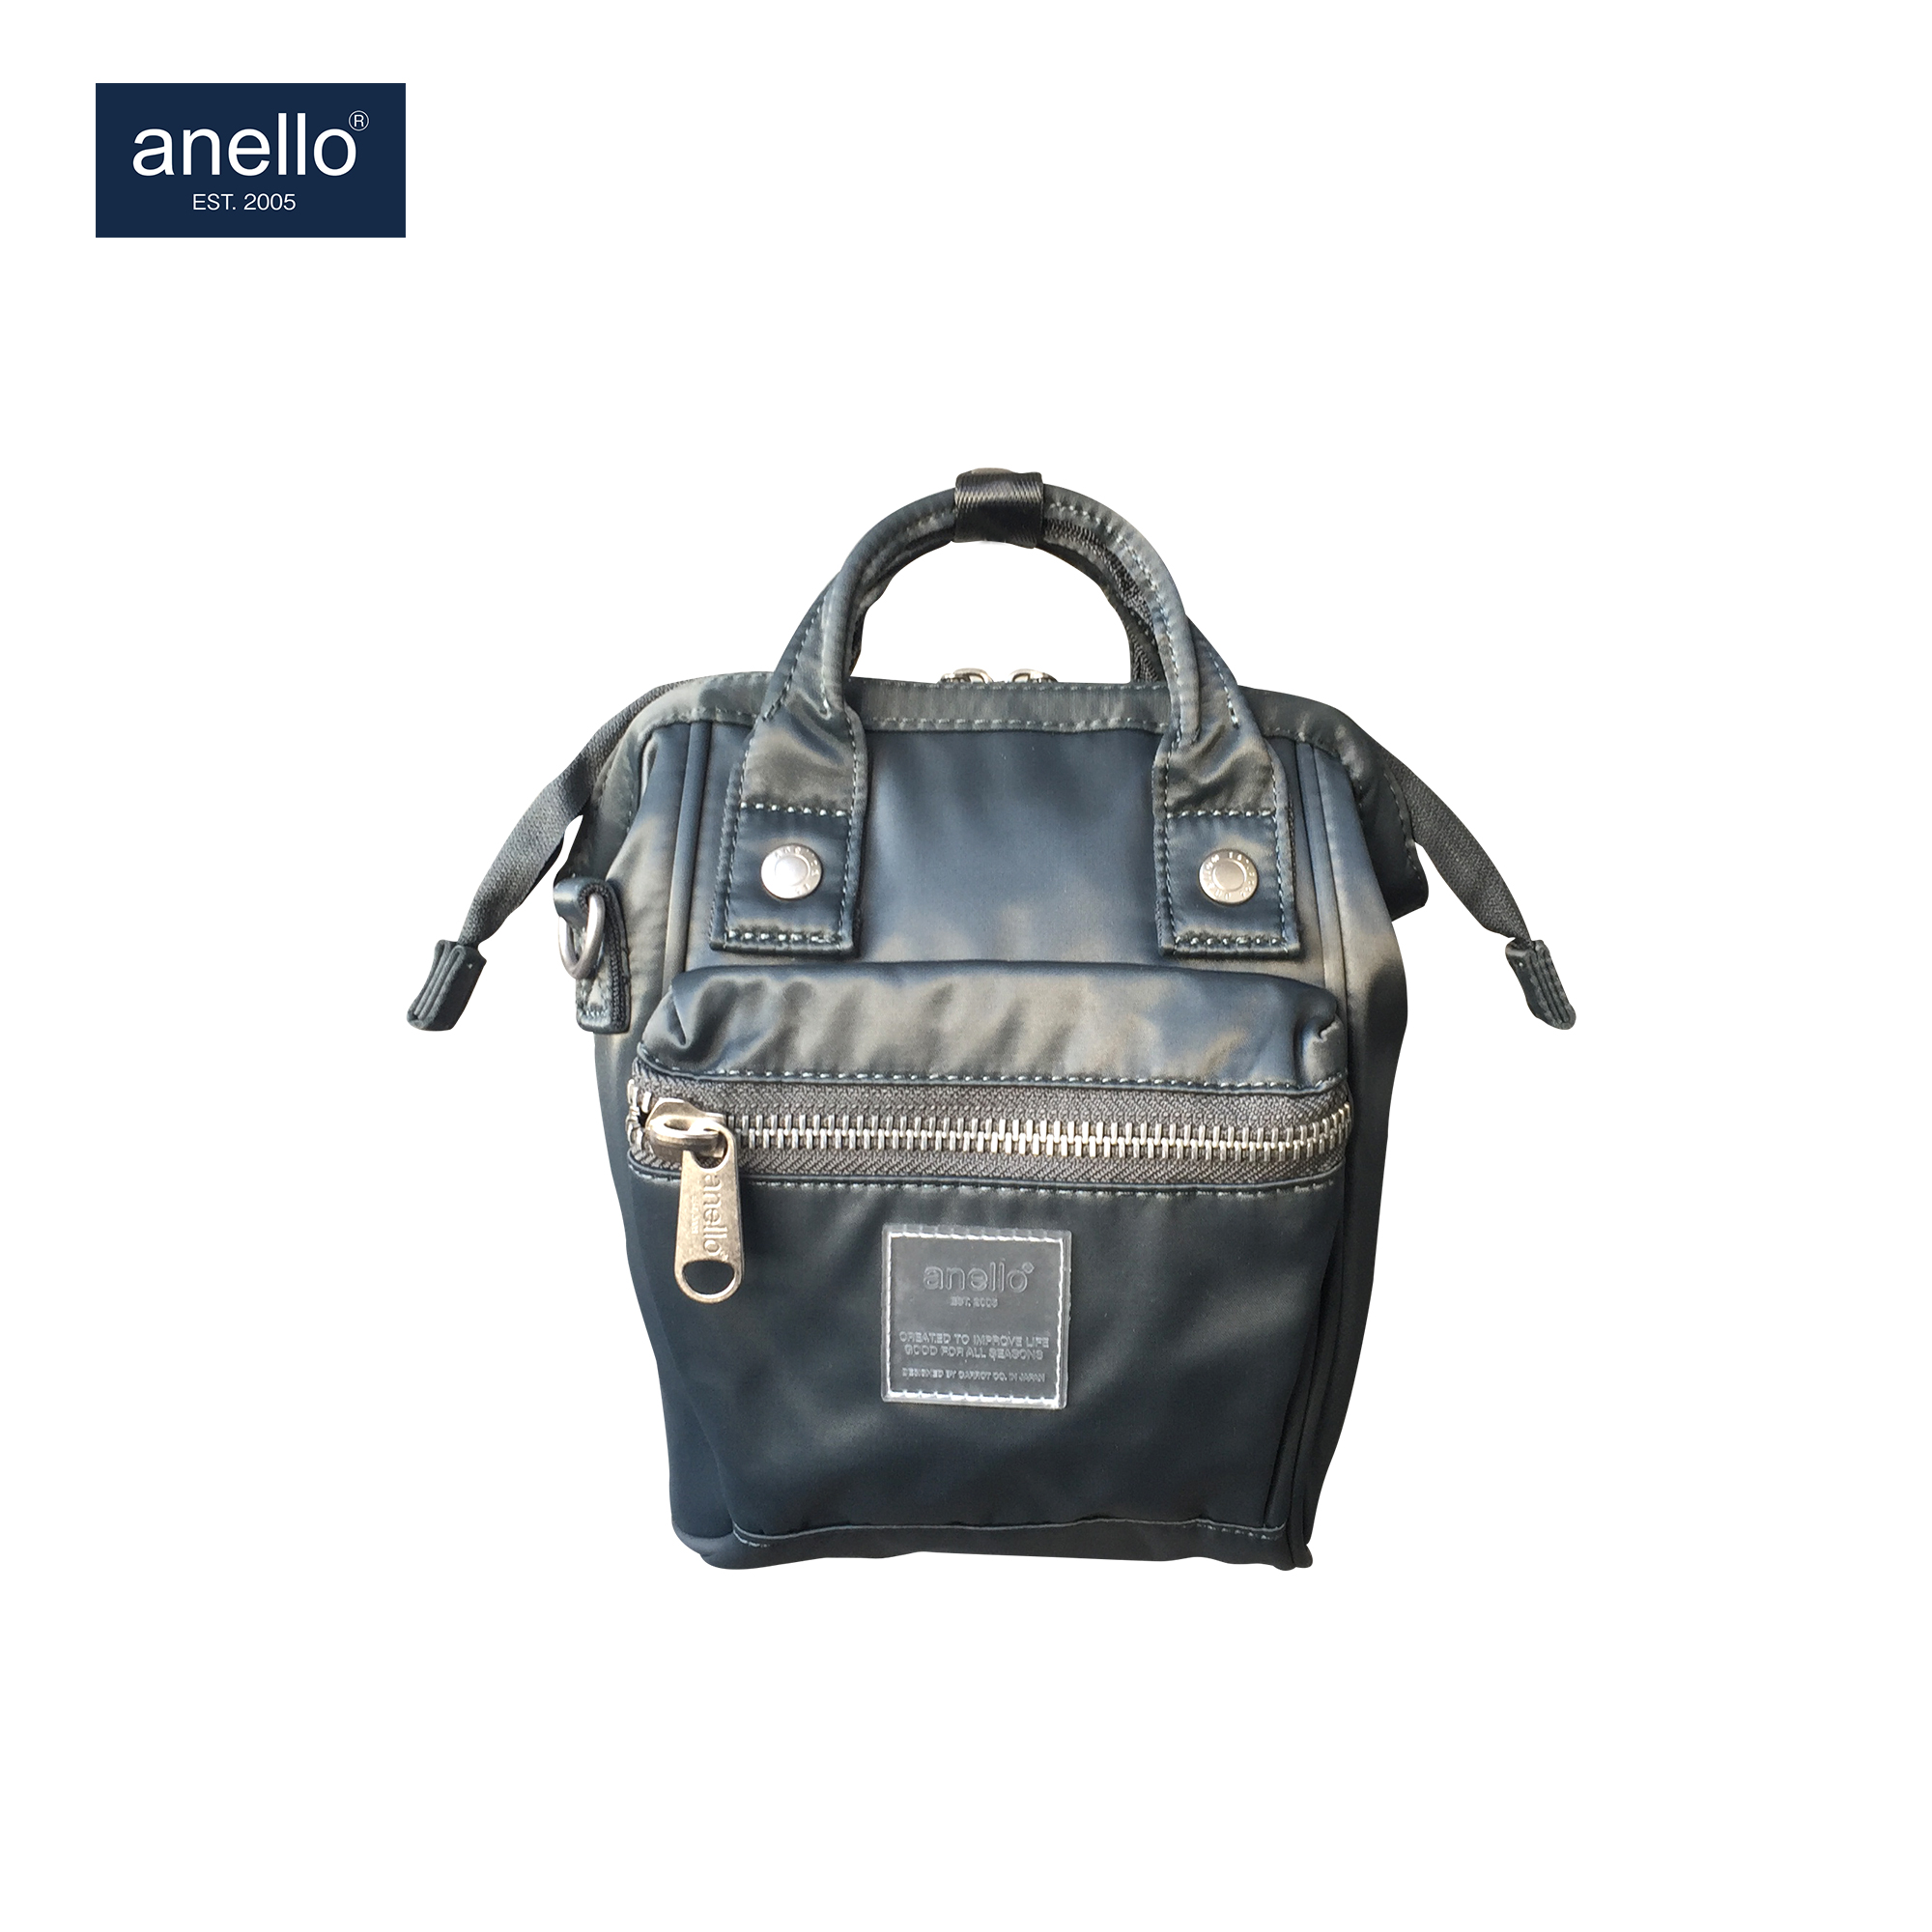 4.97% OFF on ANELLO Shoulder Bag Unisex CROSS BOTTLE Size Mini